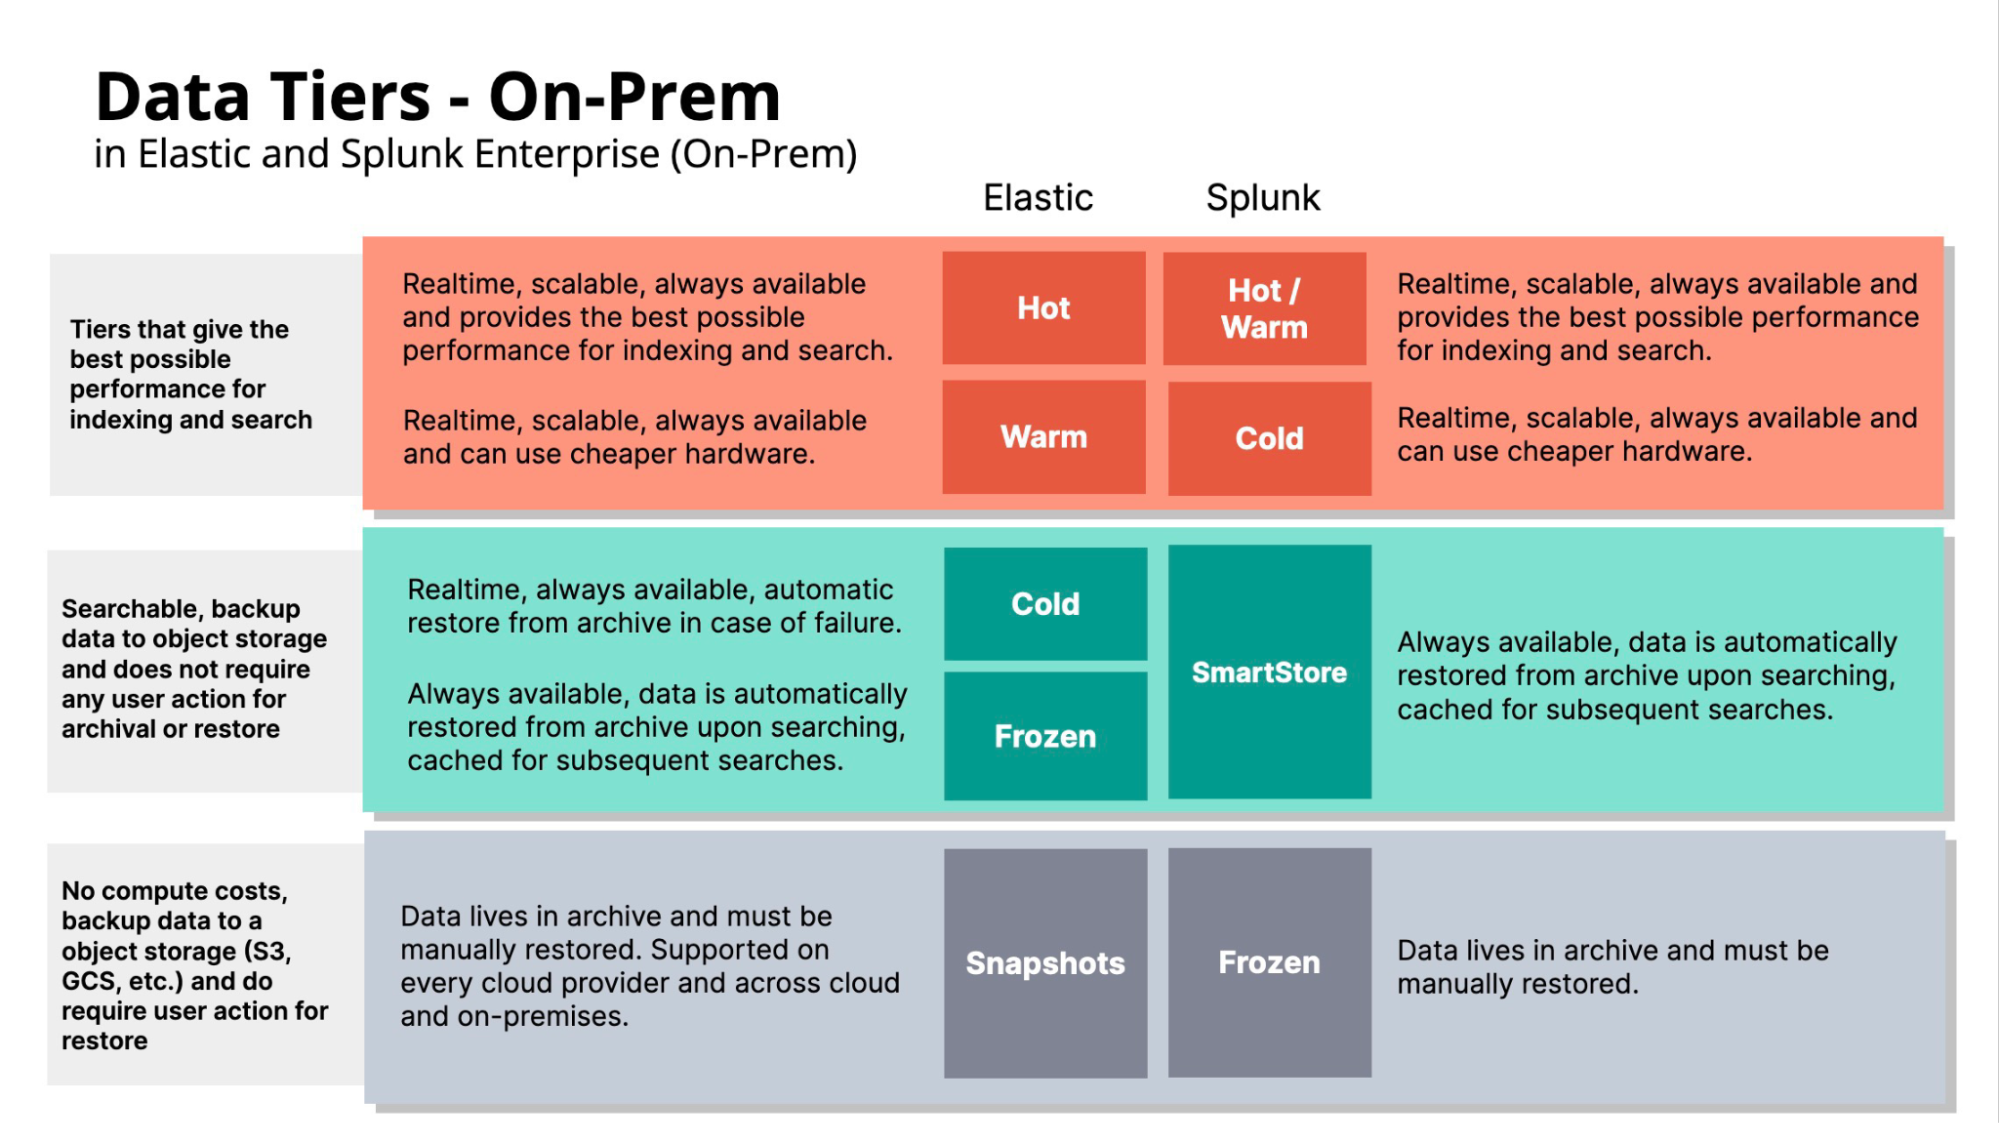 Data Tiers - On-Prem in Elastic and Splunk Enterprise (On-Prem)